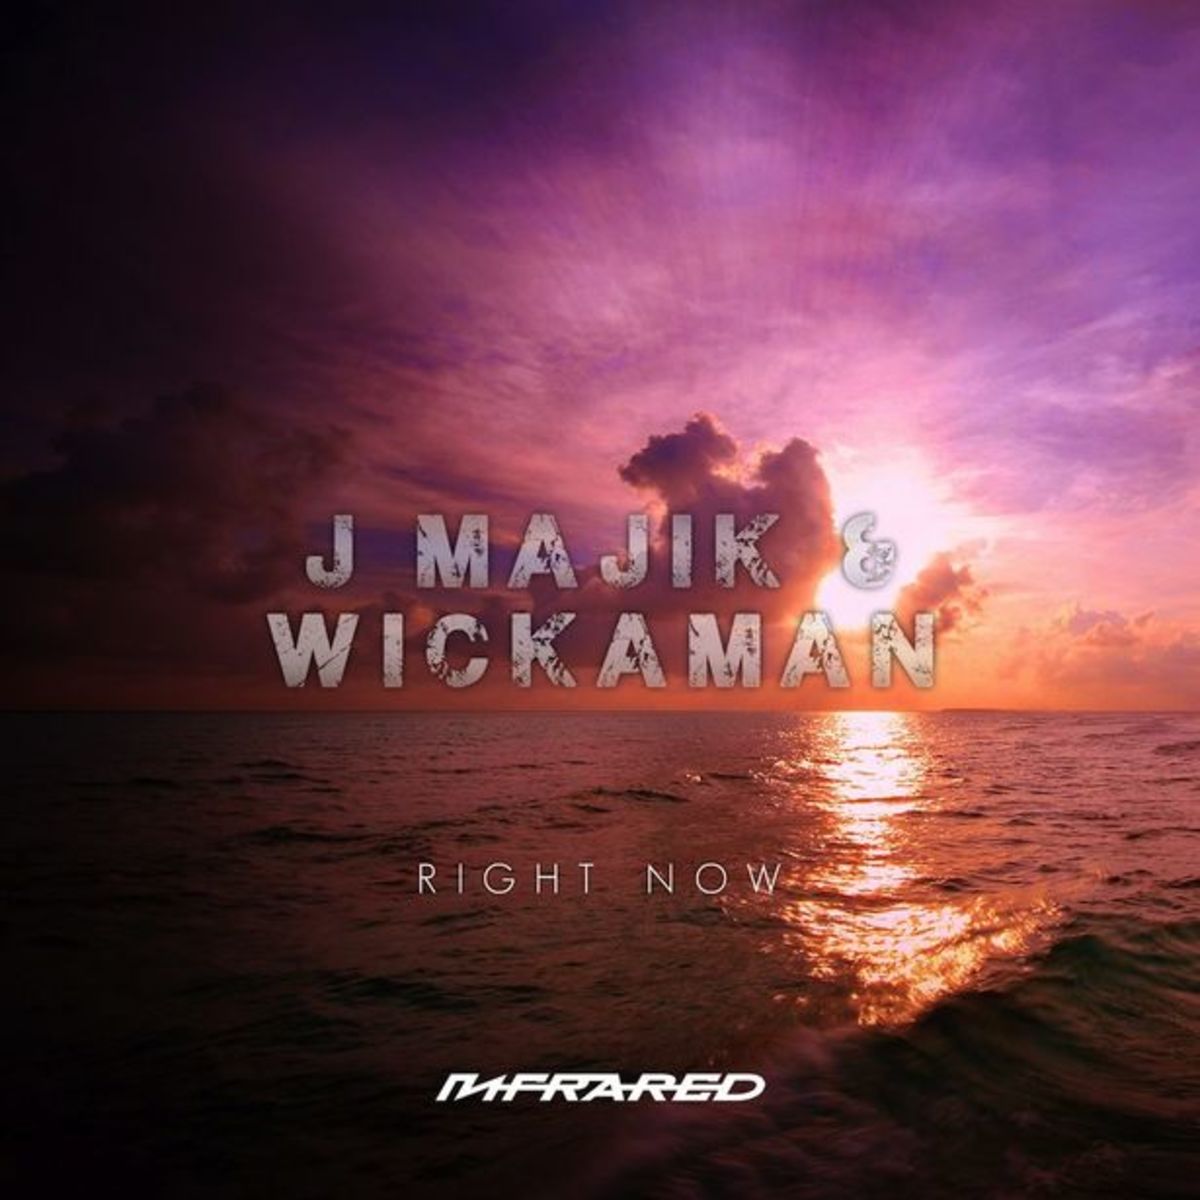 EDM Download: Get A Free Download Of J Majik & Wickman (Draft Remix) "Right Now"